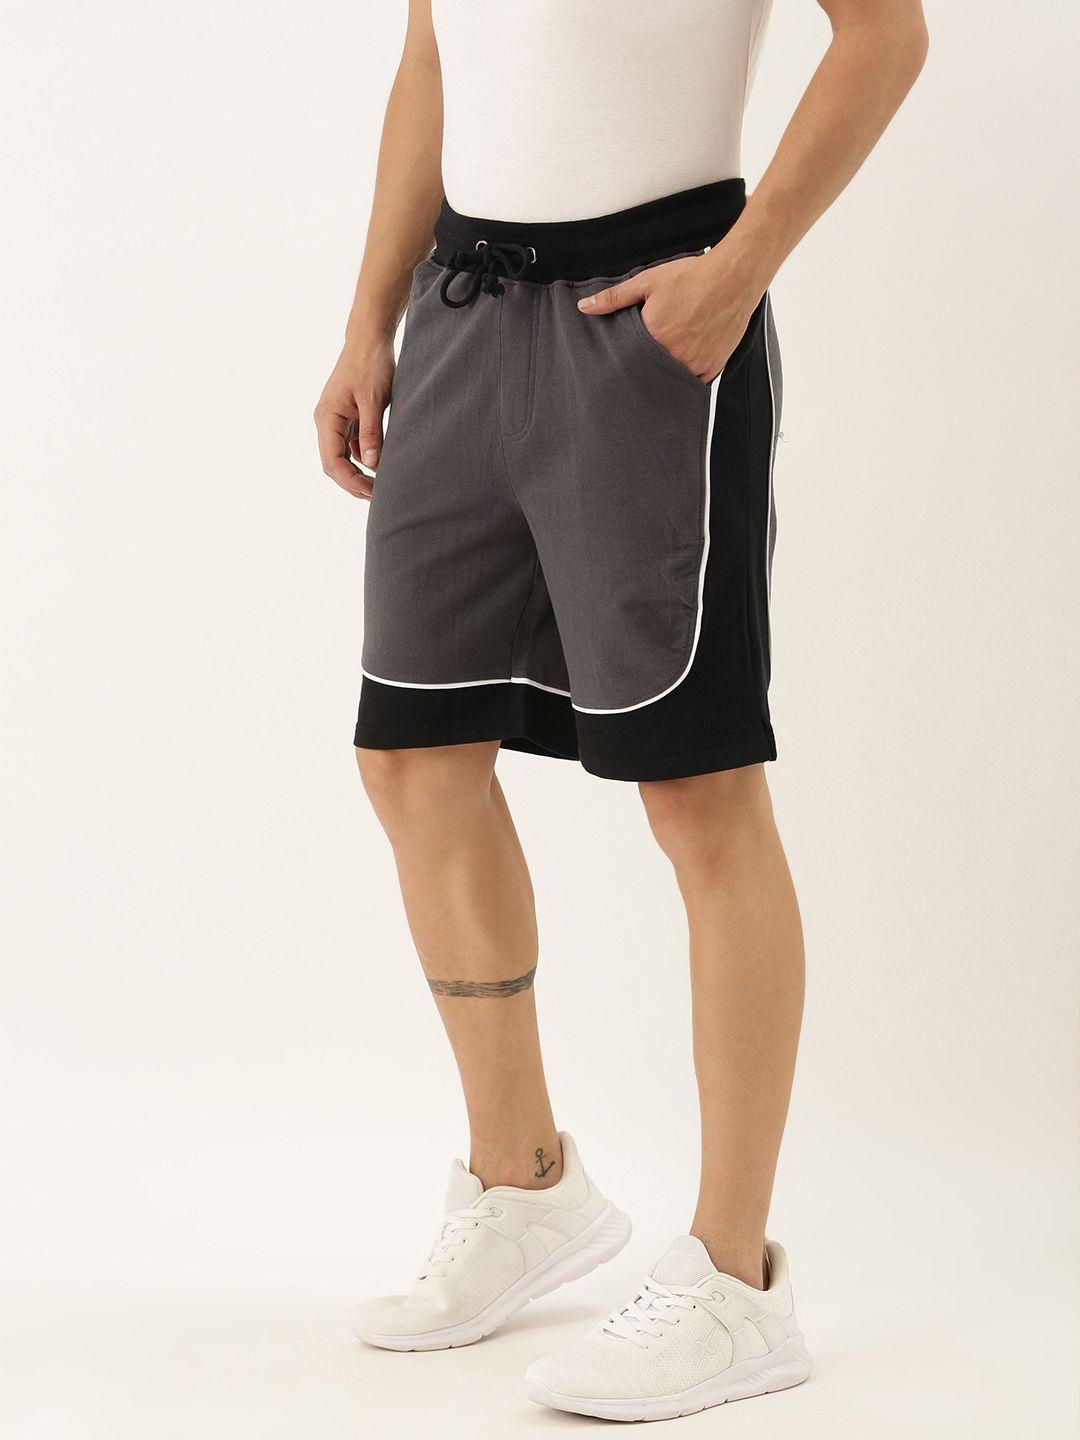 arise-men-charcoal-grey-solid-regular-fit-regular-shorts-with-colorblocking-panel-detail